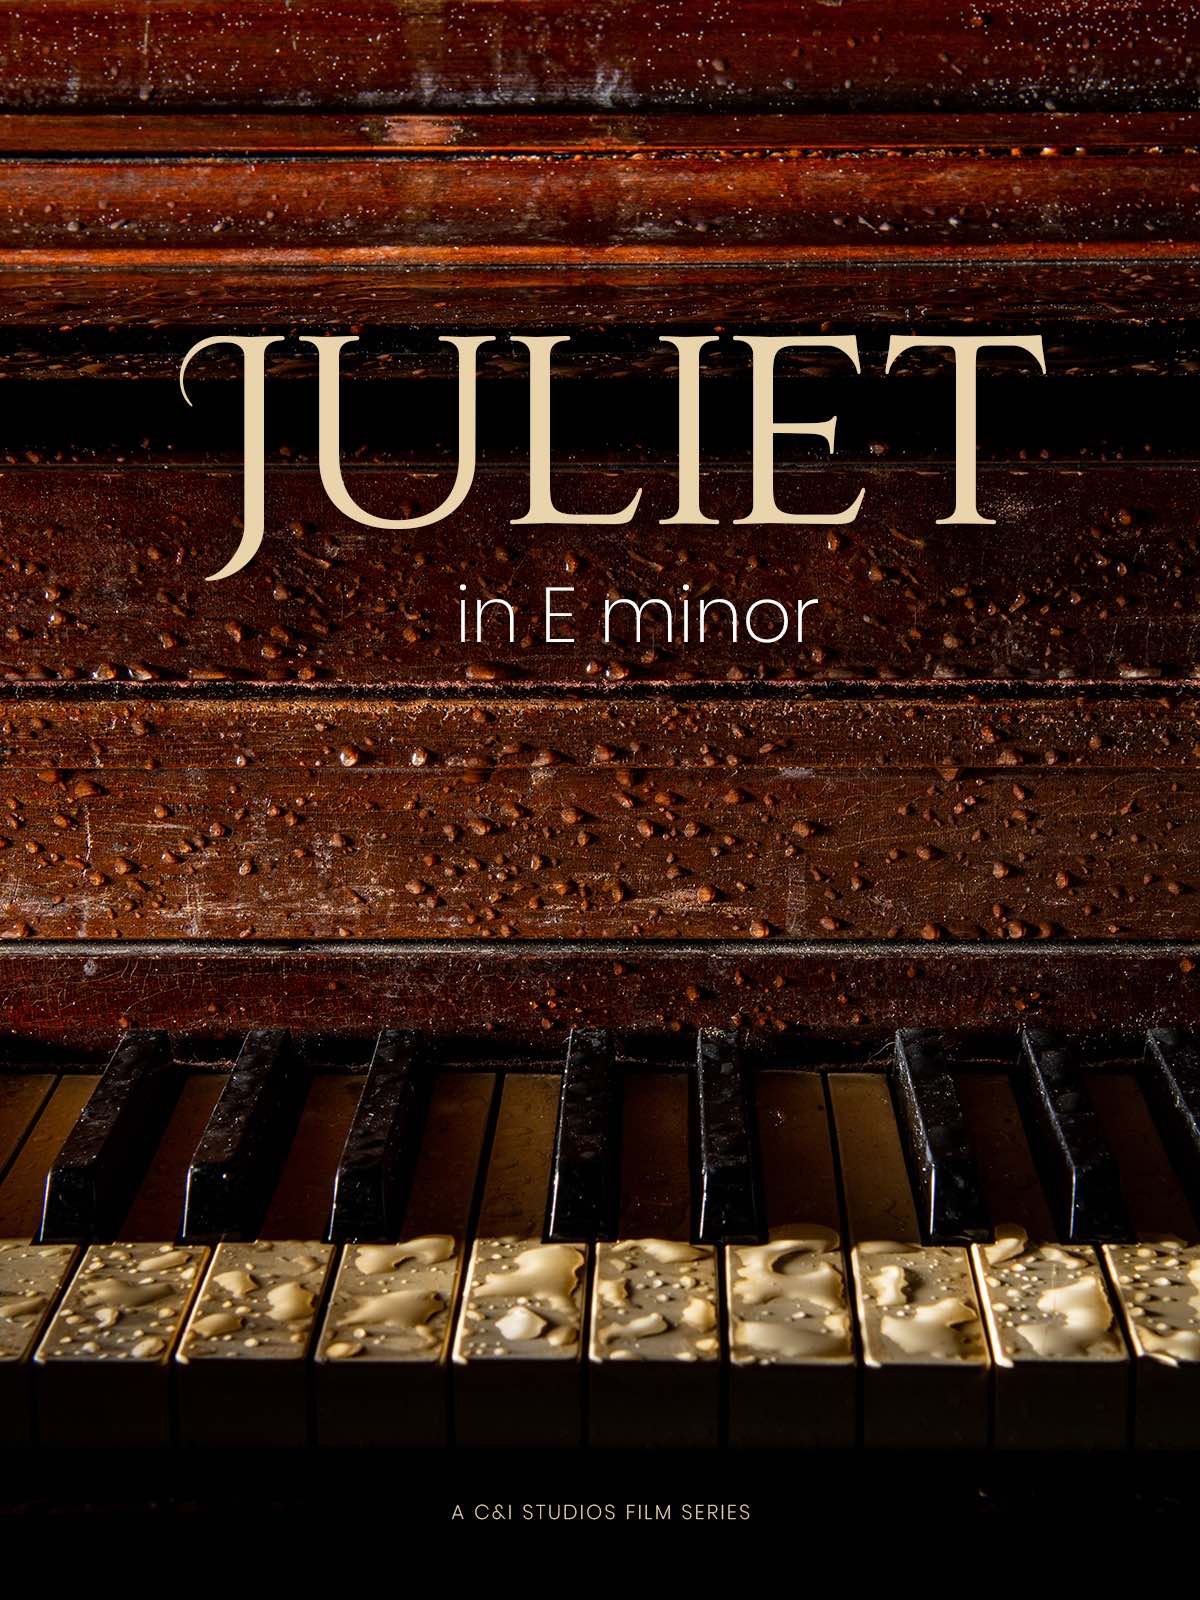 Juliet In E Minor, a C&I Studios Original Production Poster with closeup display of wet piano keys